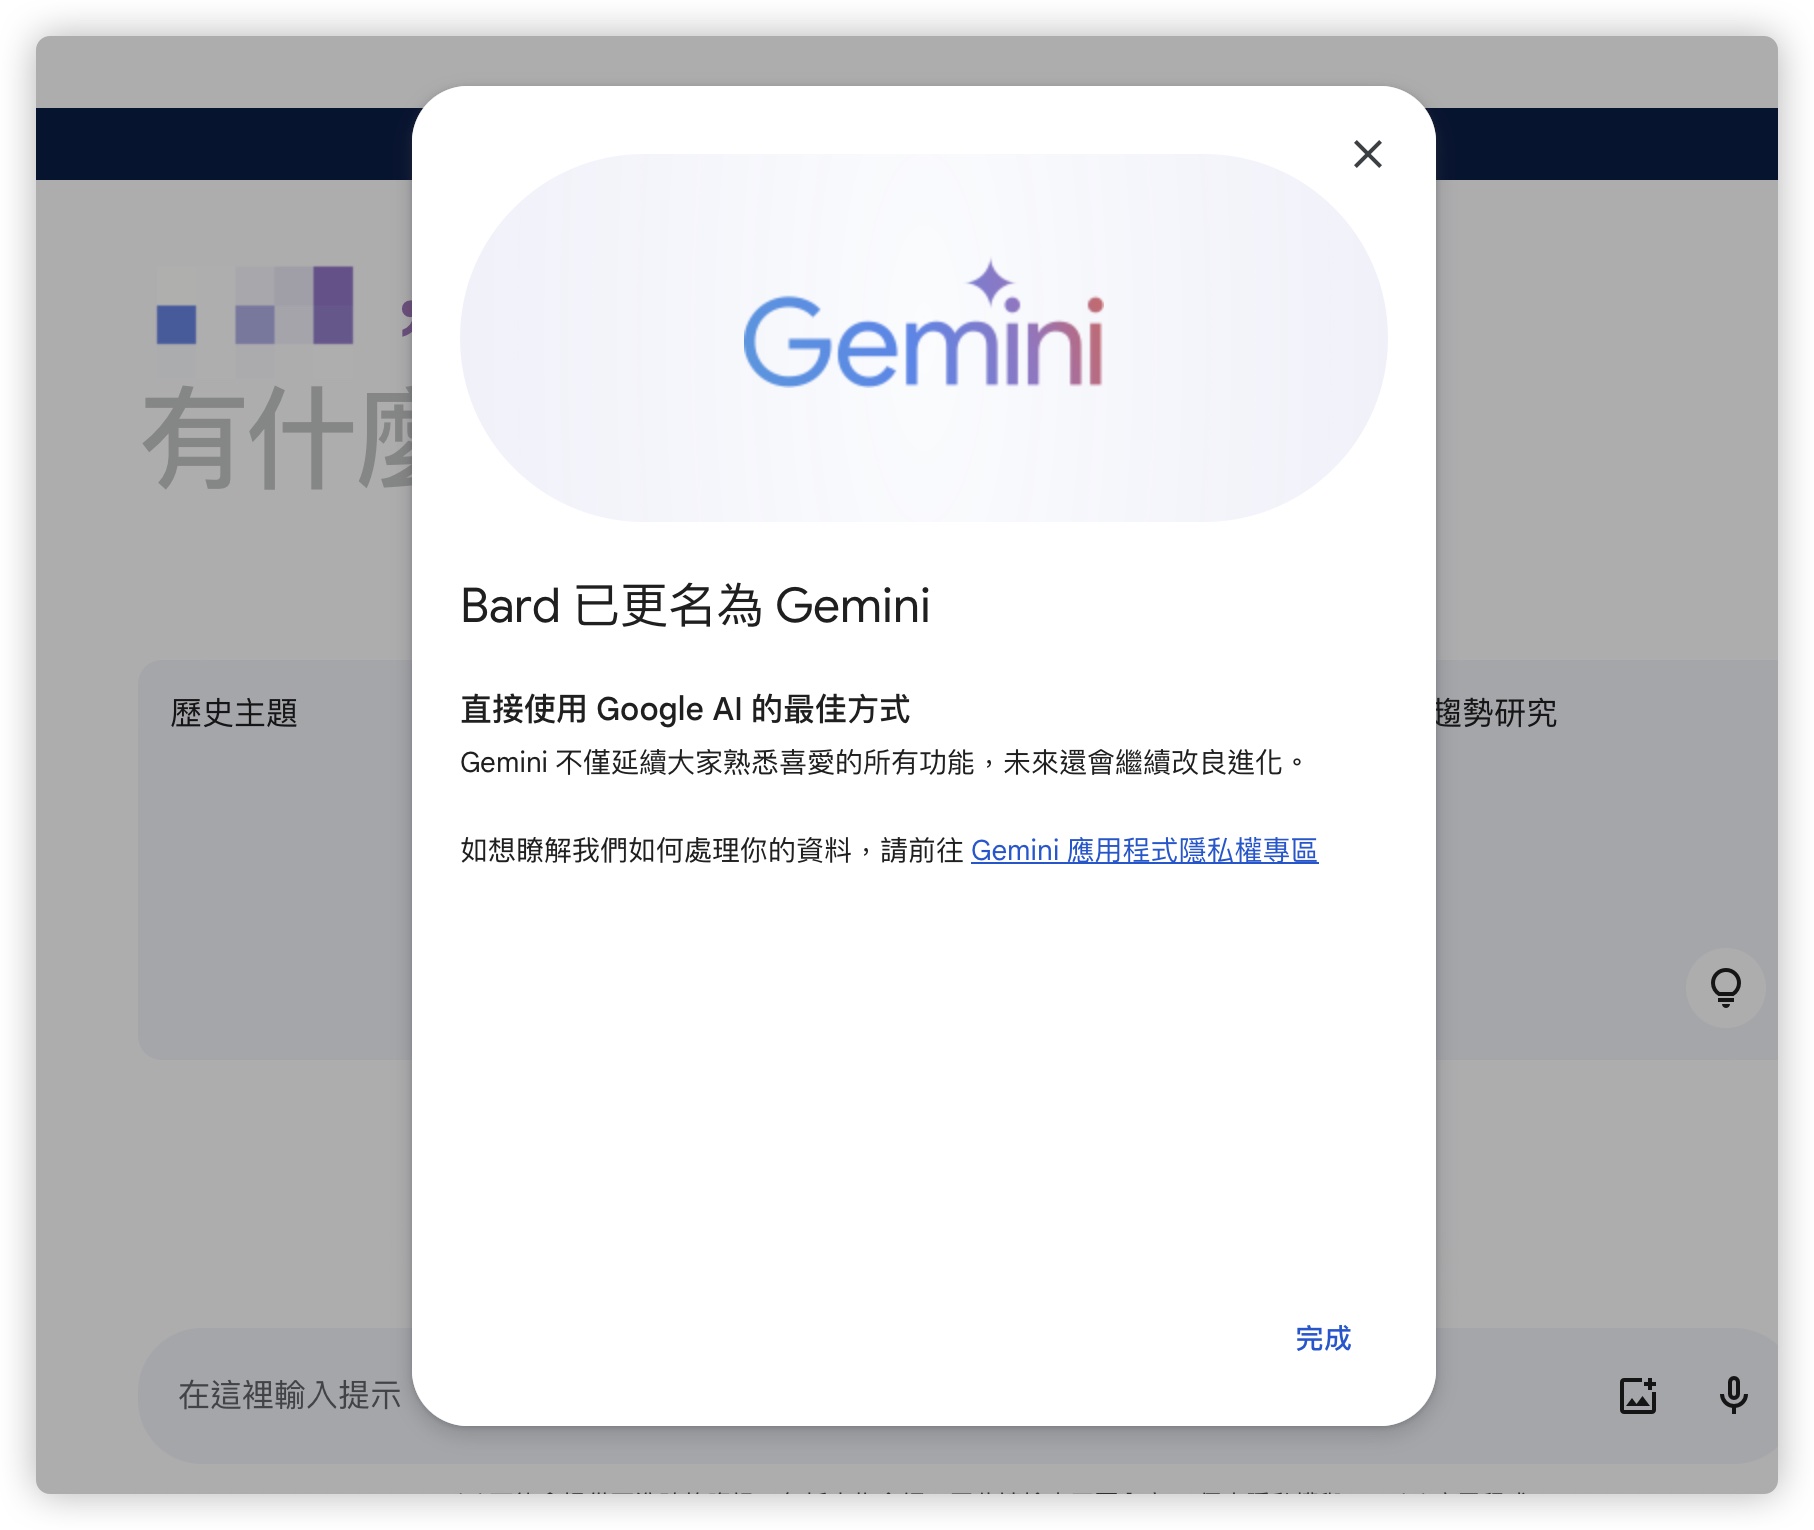 Google Bard 改名 Gemini